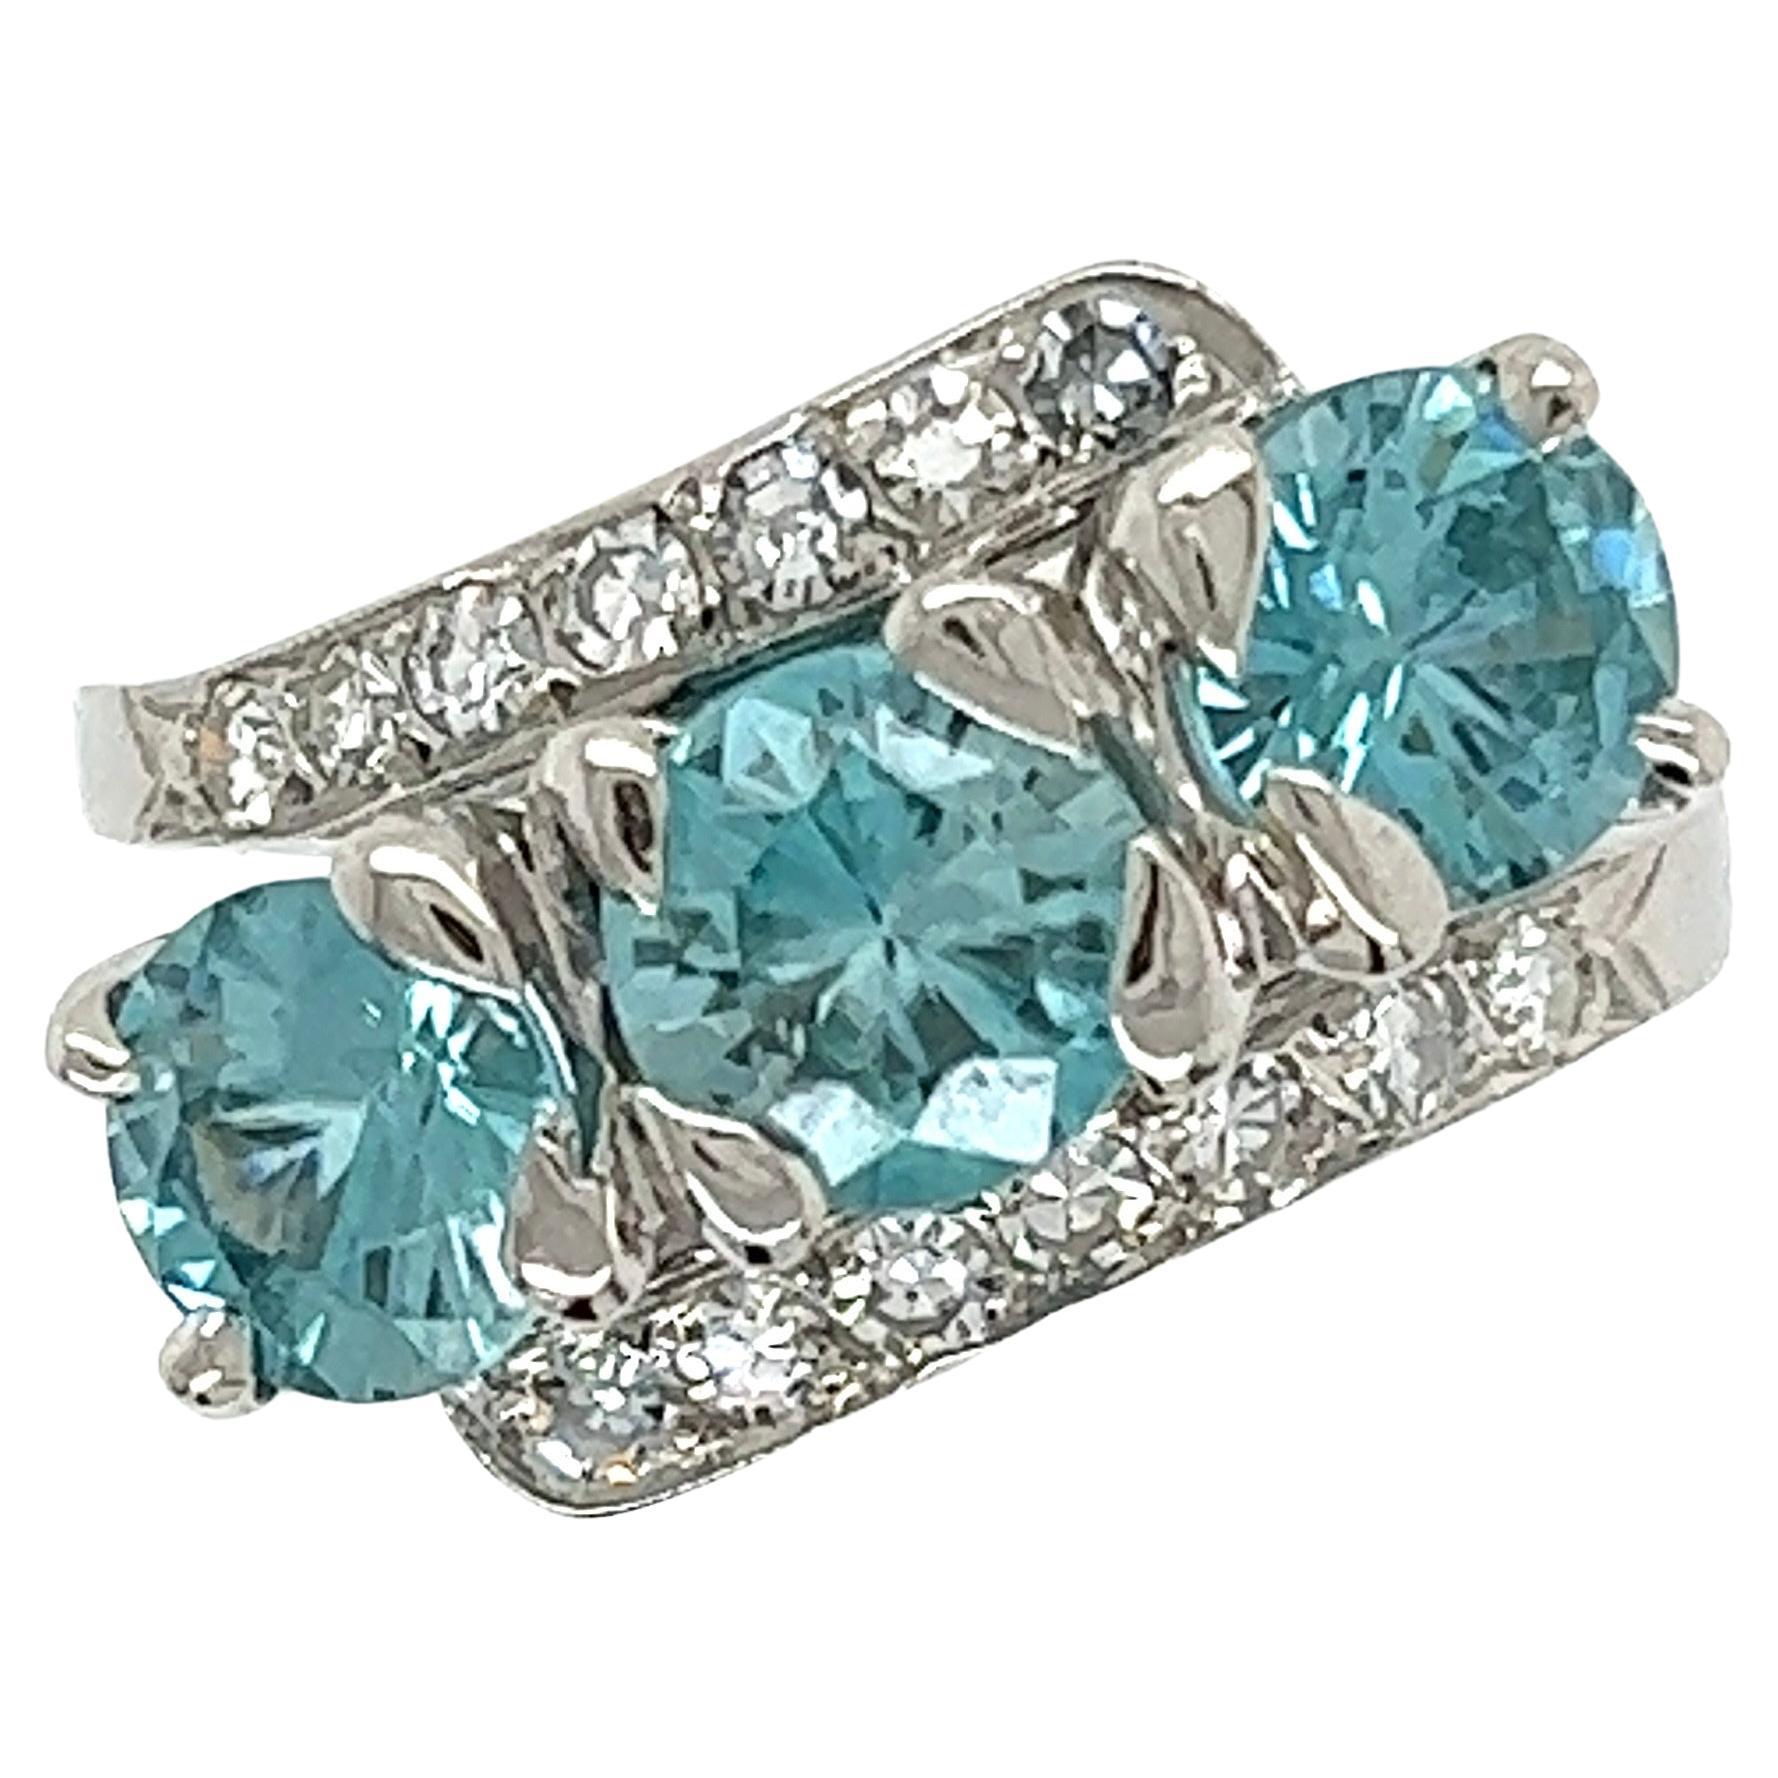 Vintage Blue Zircon Diamond 3-Stone Platinum Cocktail Ring Estate Fine Jewelry